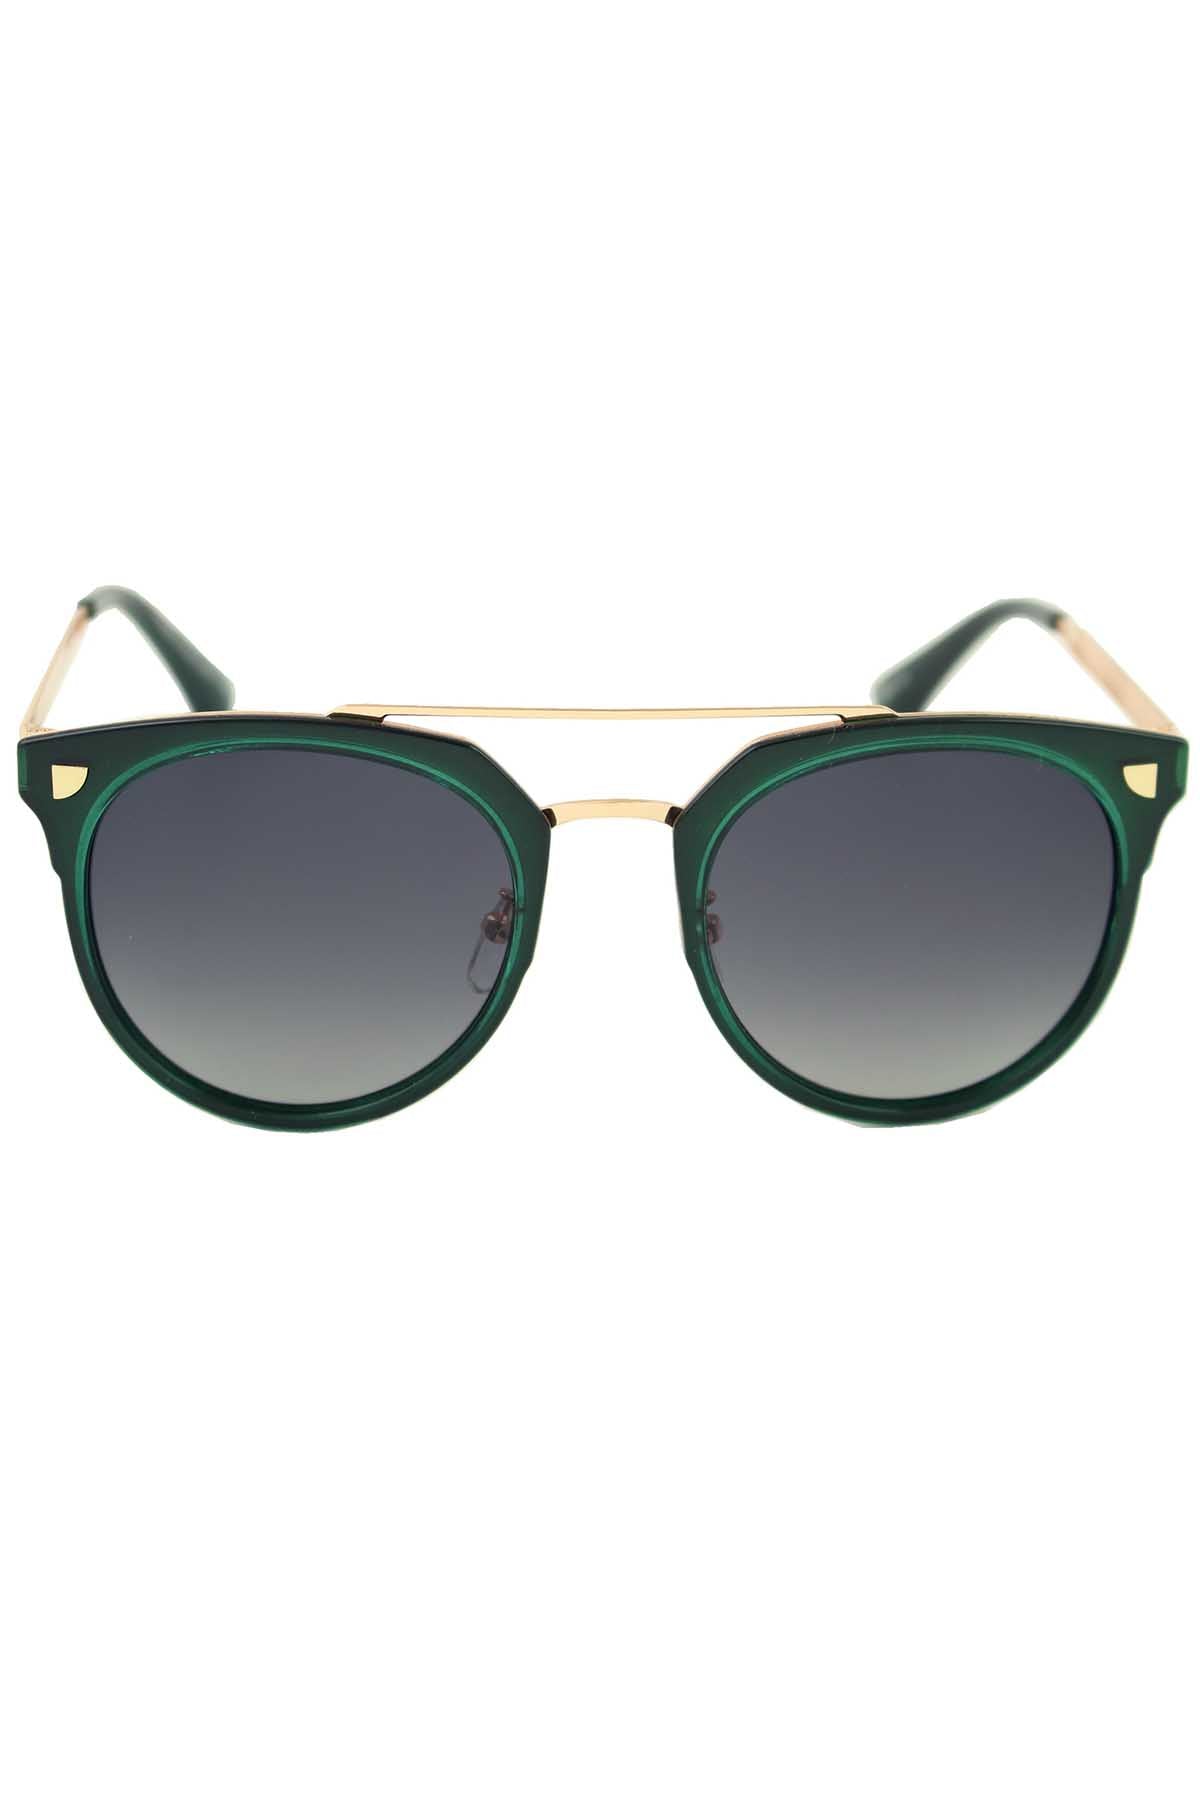 DIBI Green/Gold Venice Sunglasses